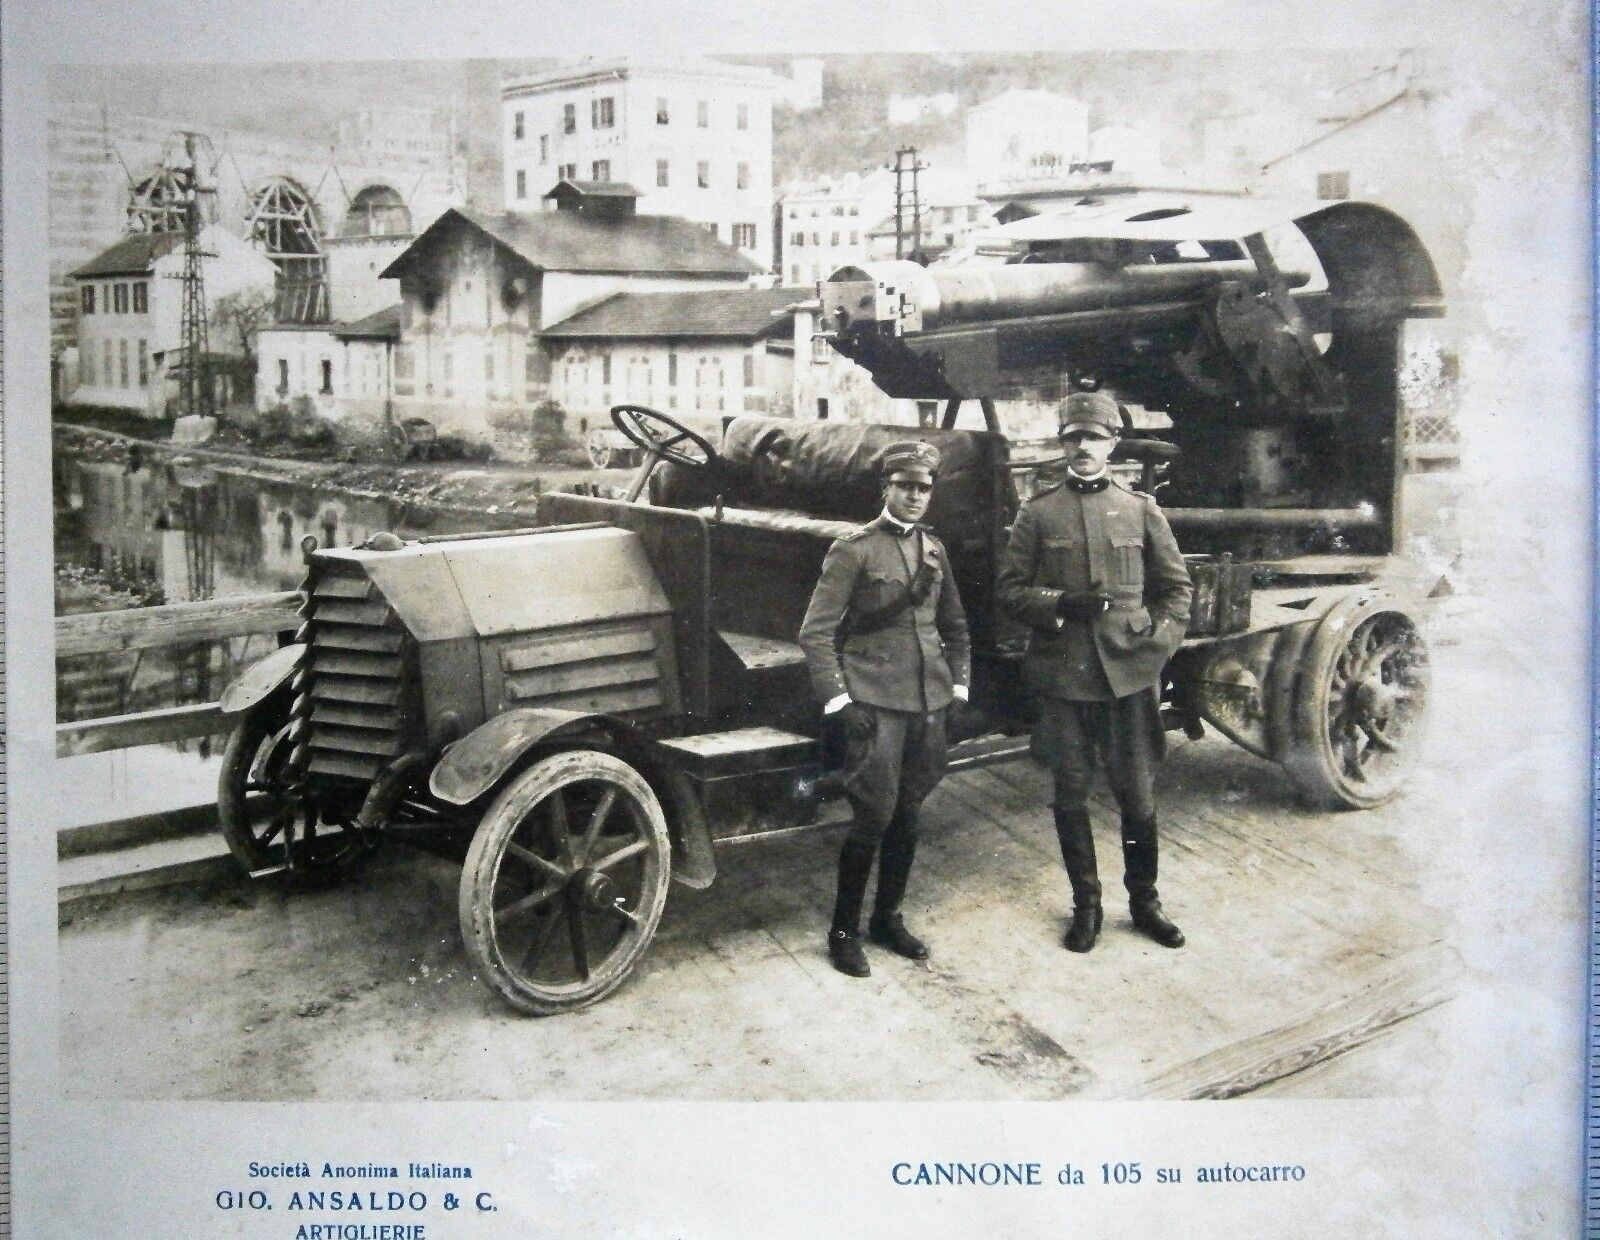 WWI Image of Automobile Mounted Artillery produced by Societa Anonima Italiana 